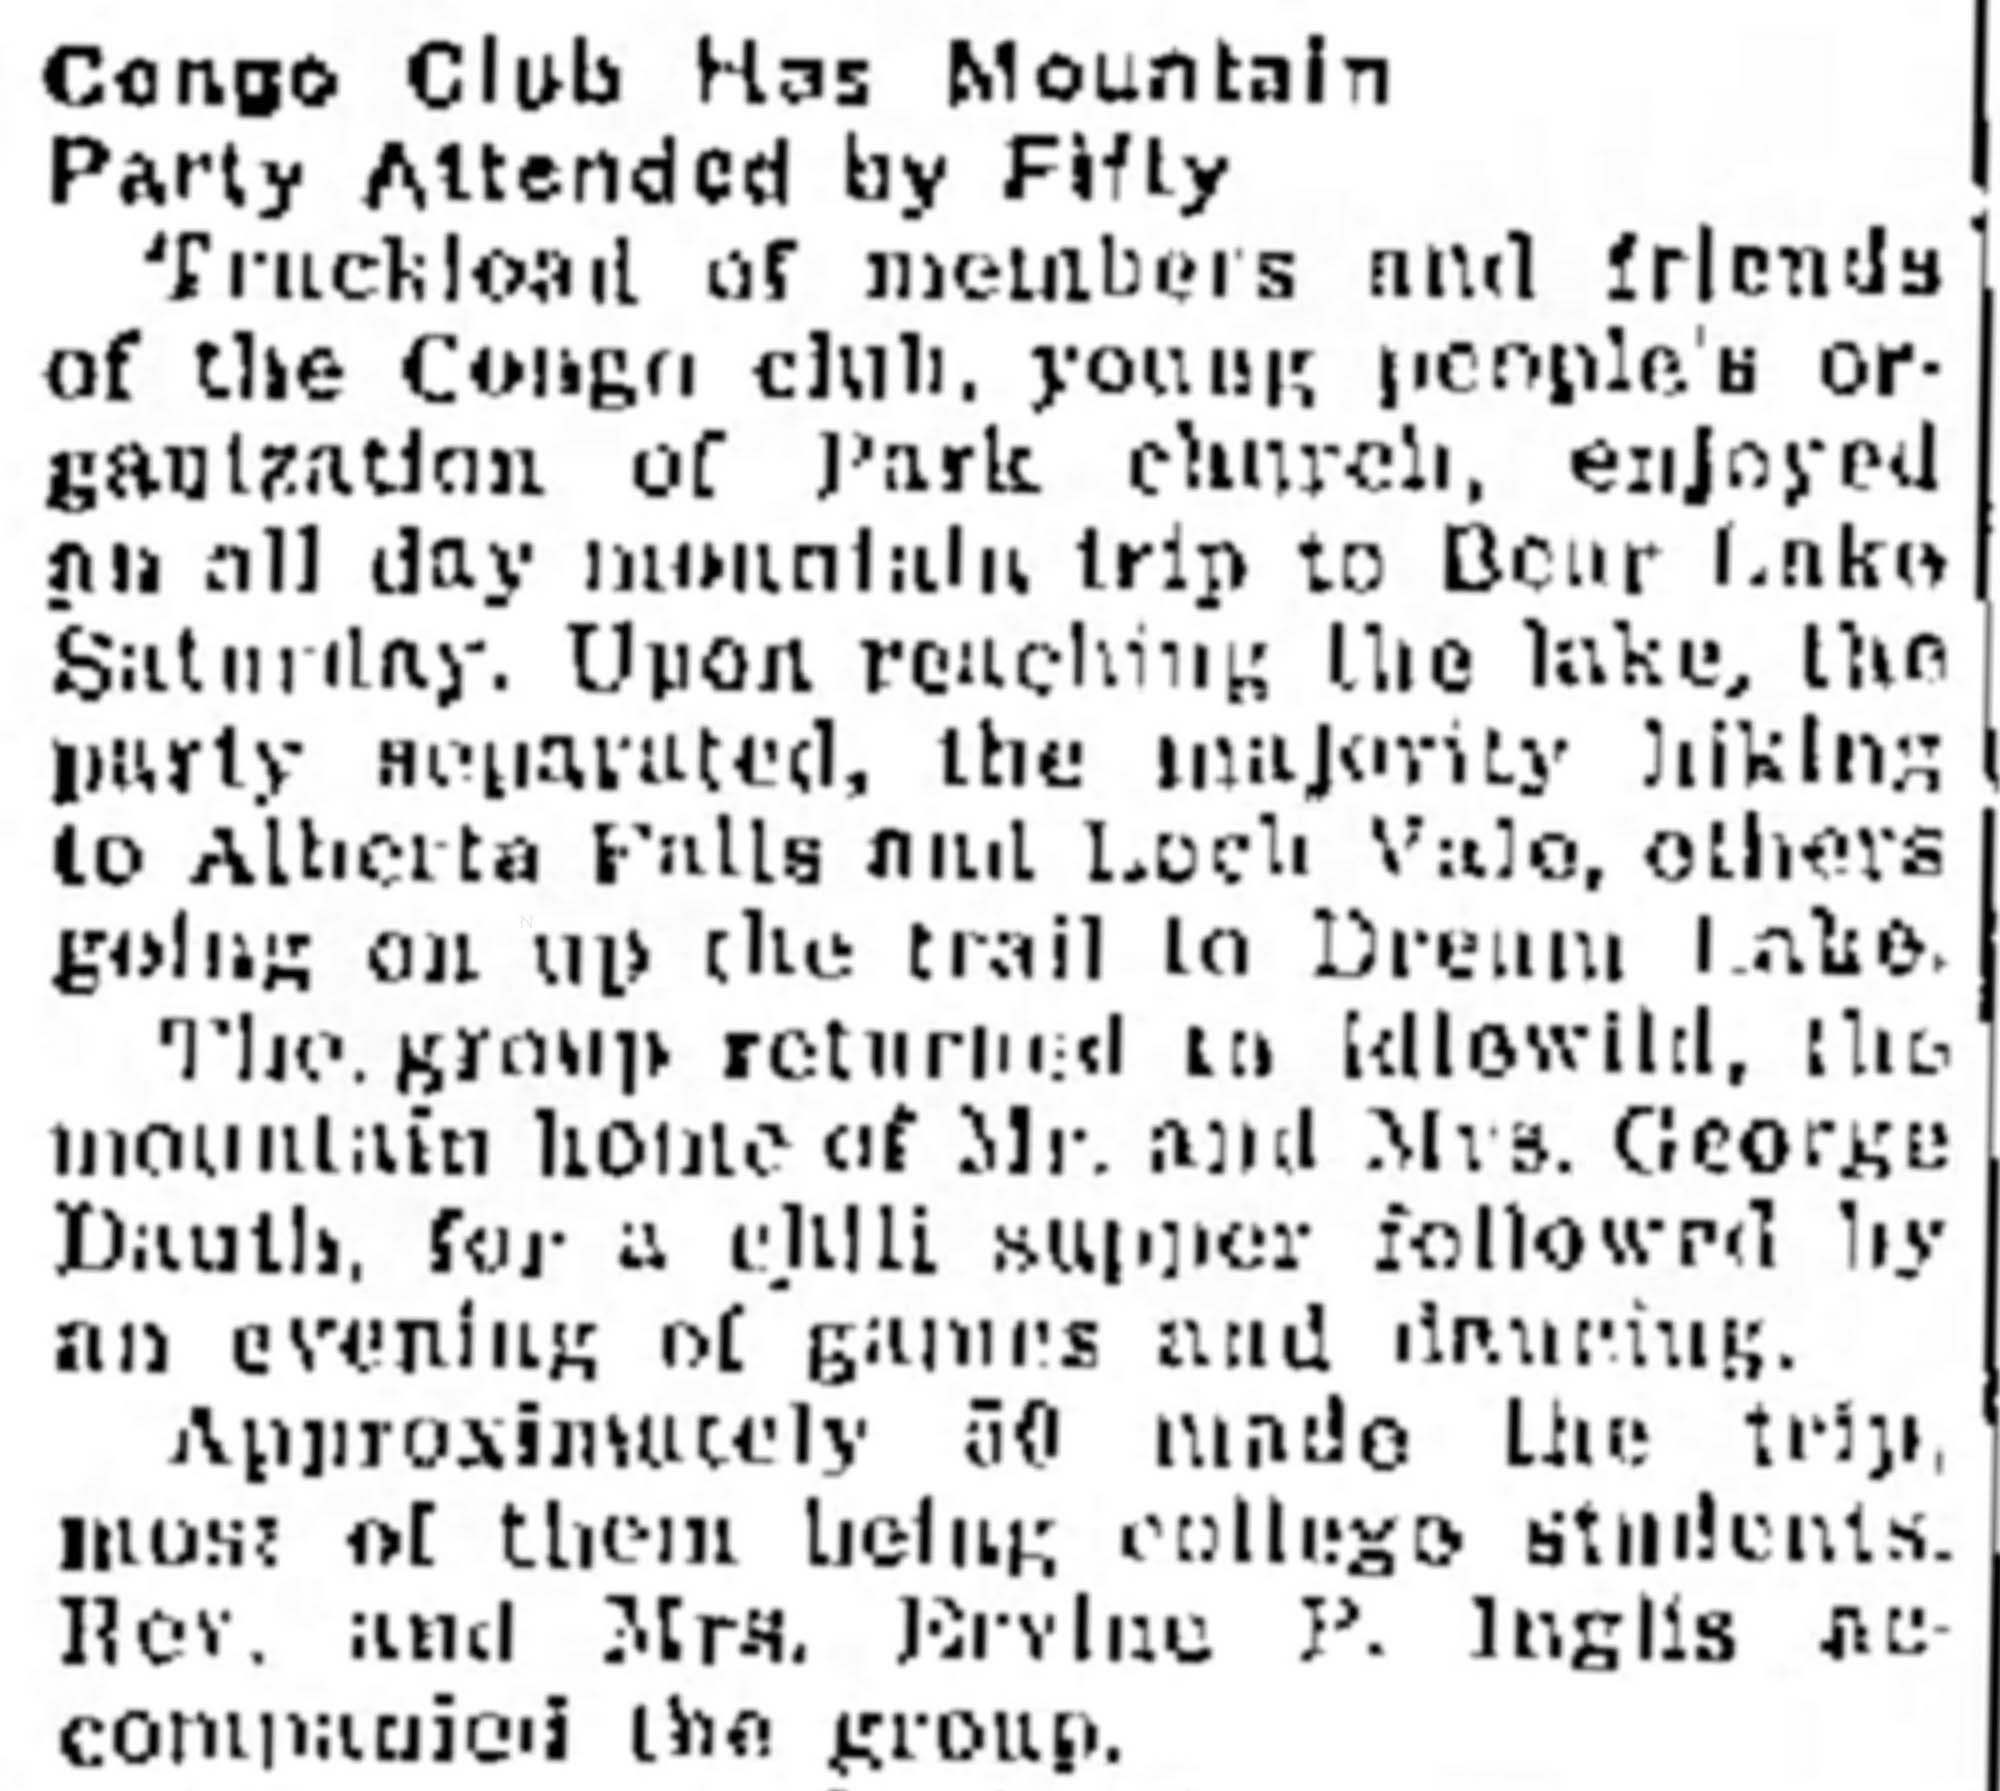 Idlewild Lodge - idlewildlodge.github.io - 1934-10-16 - Greeley Daily Tribune - Congo Club at George Dauths Idlewild Lodge